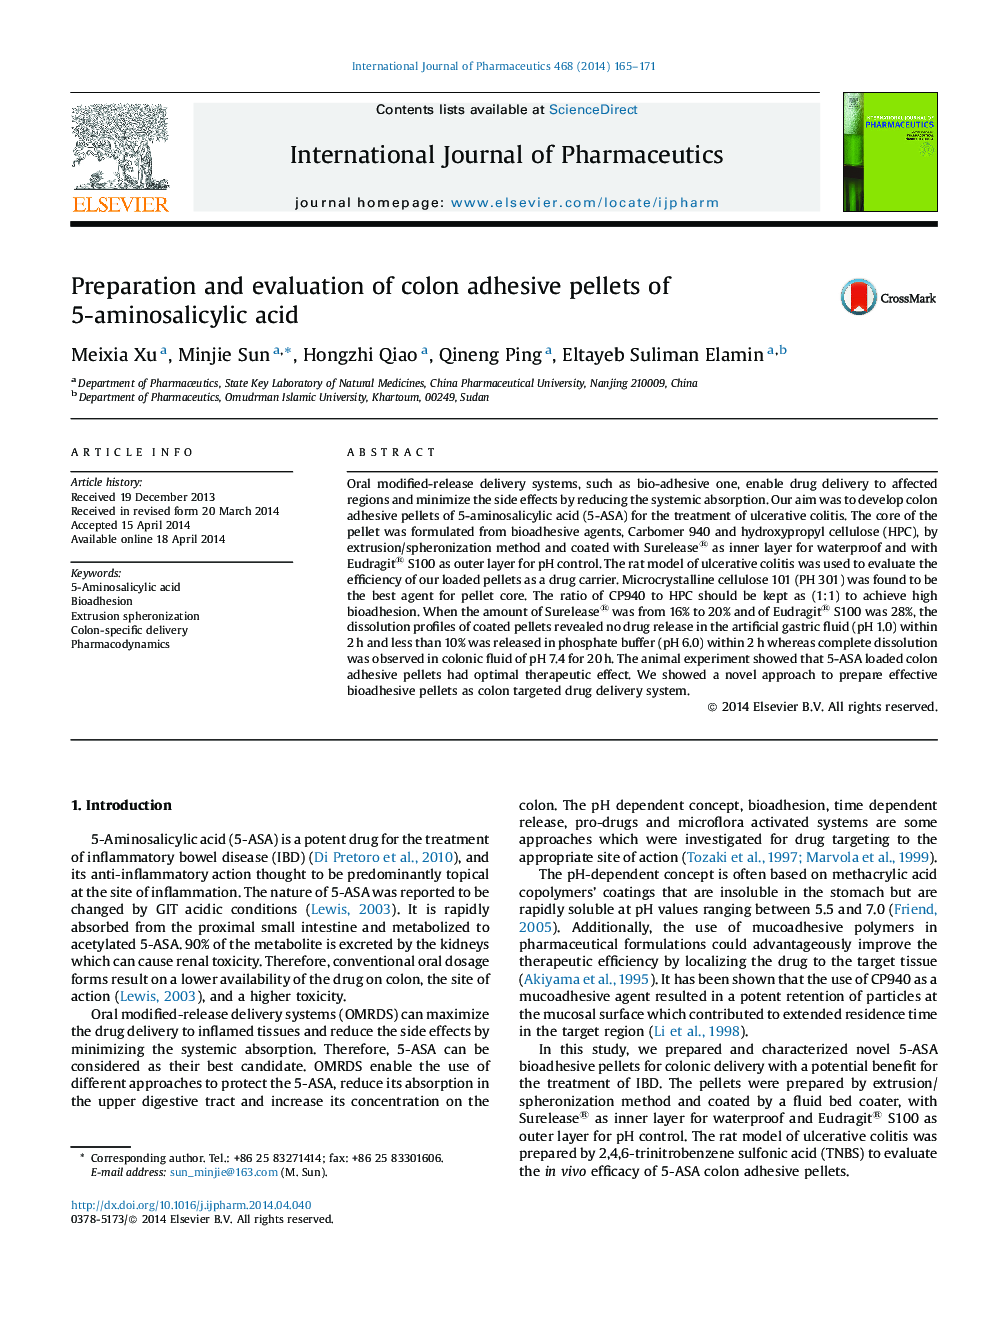 Pharmaceutical nanotechnologyPreparation and evaluation of colon adhesive pellets of 5-aminosalicylic acid